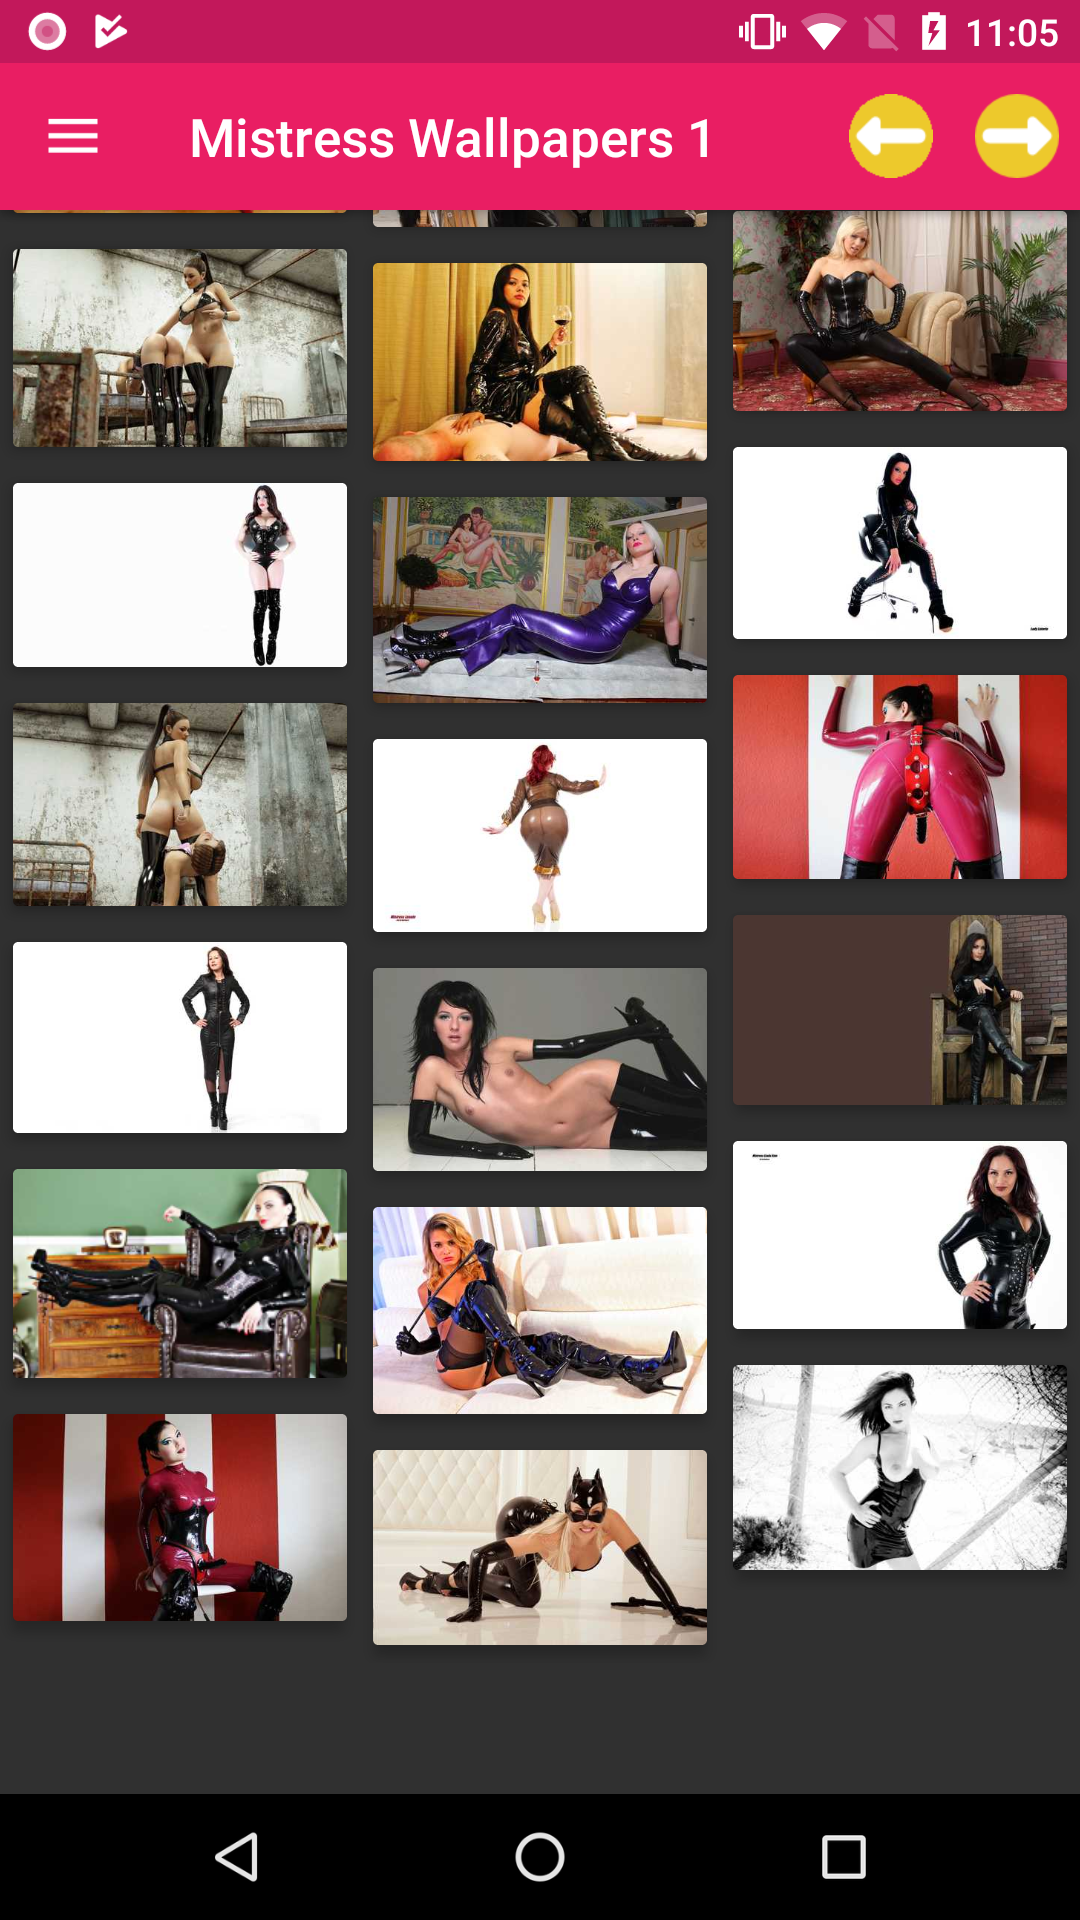 Mistress Wallpapers apps,hentai,mistress,femdom,futanari,have,ocean,apk,aletta,bdsm,latex,henti,appa,best,pics,image,picture,top,domination,that,free,app,galleries,wallpapers,sexy,hentie